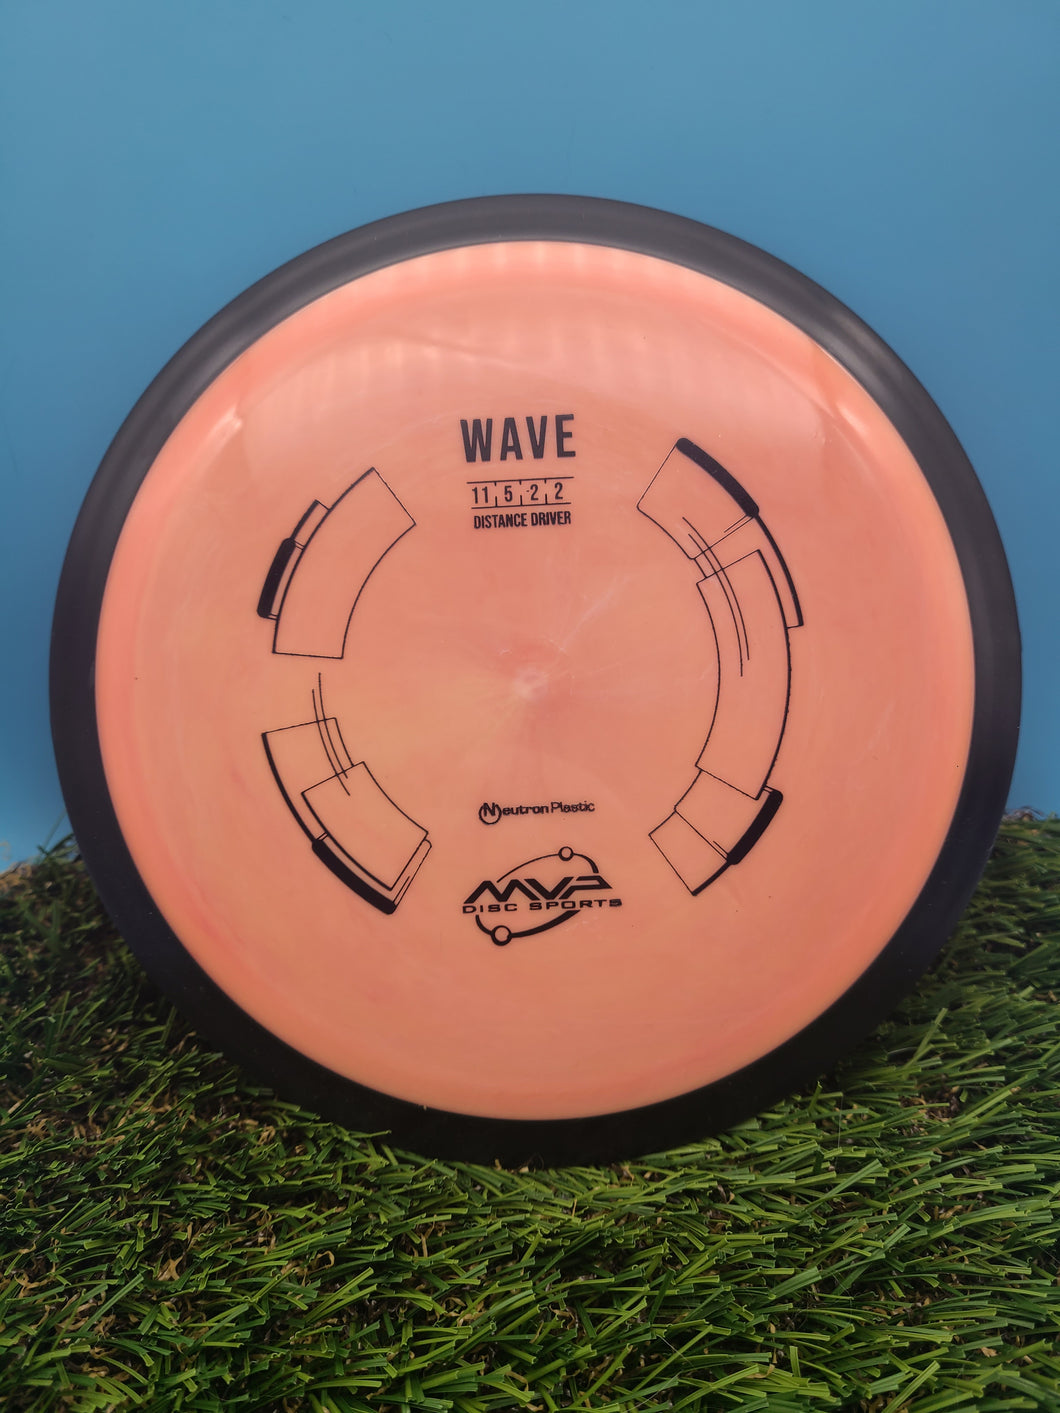 MVP Wave Neutron Plastic Driver